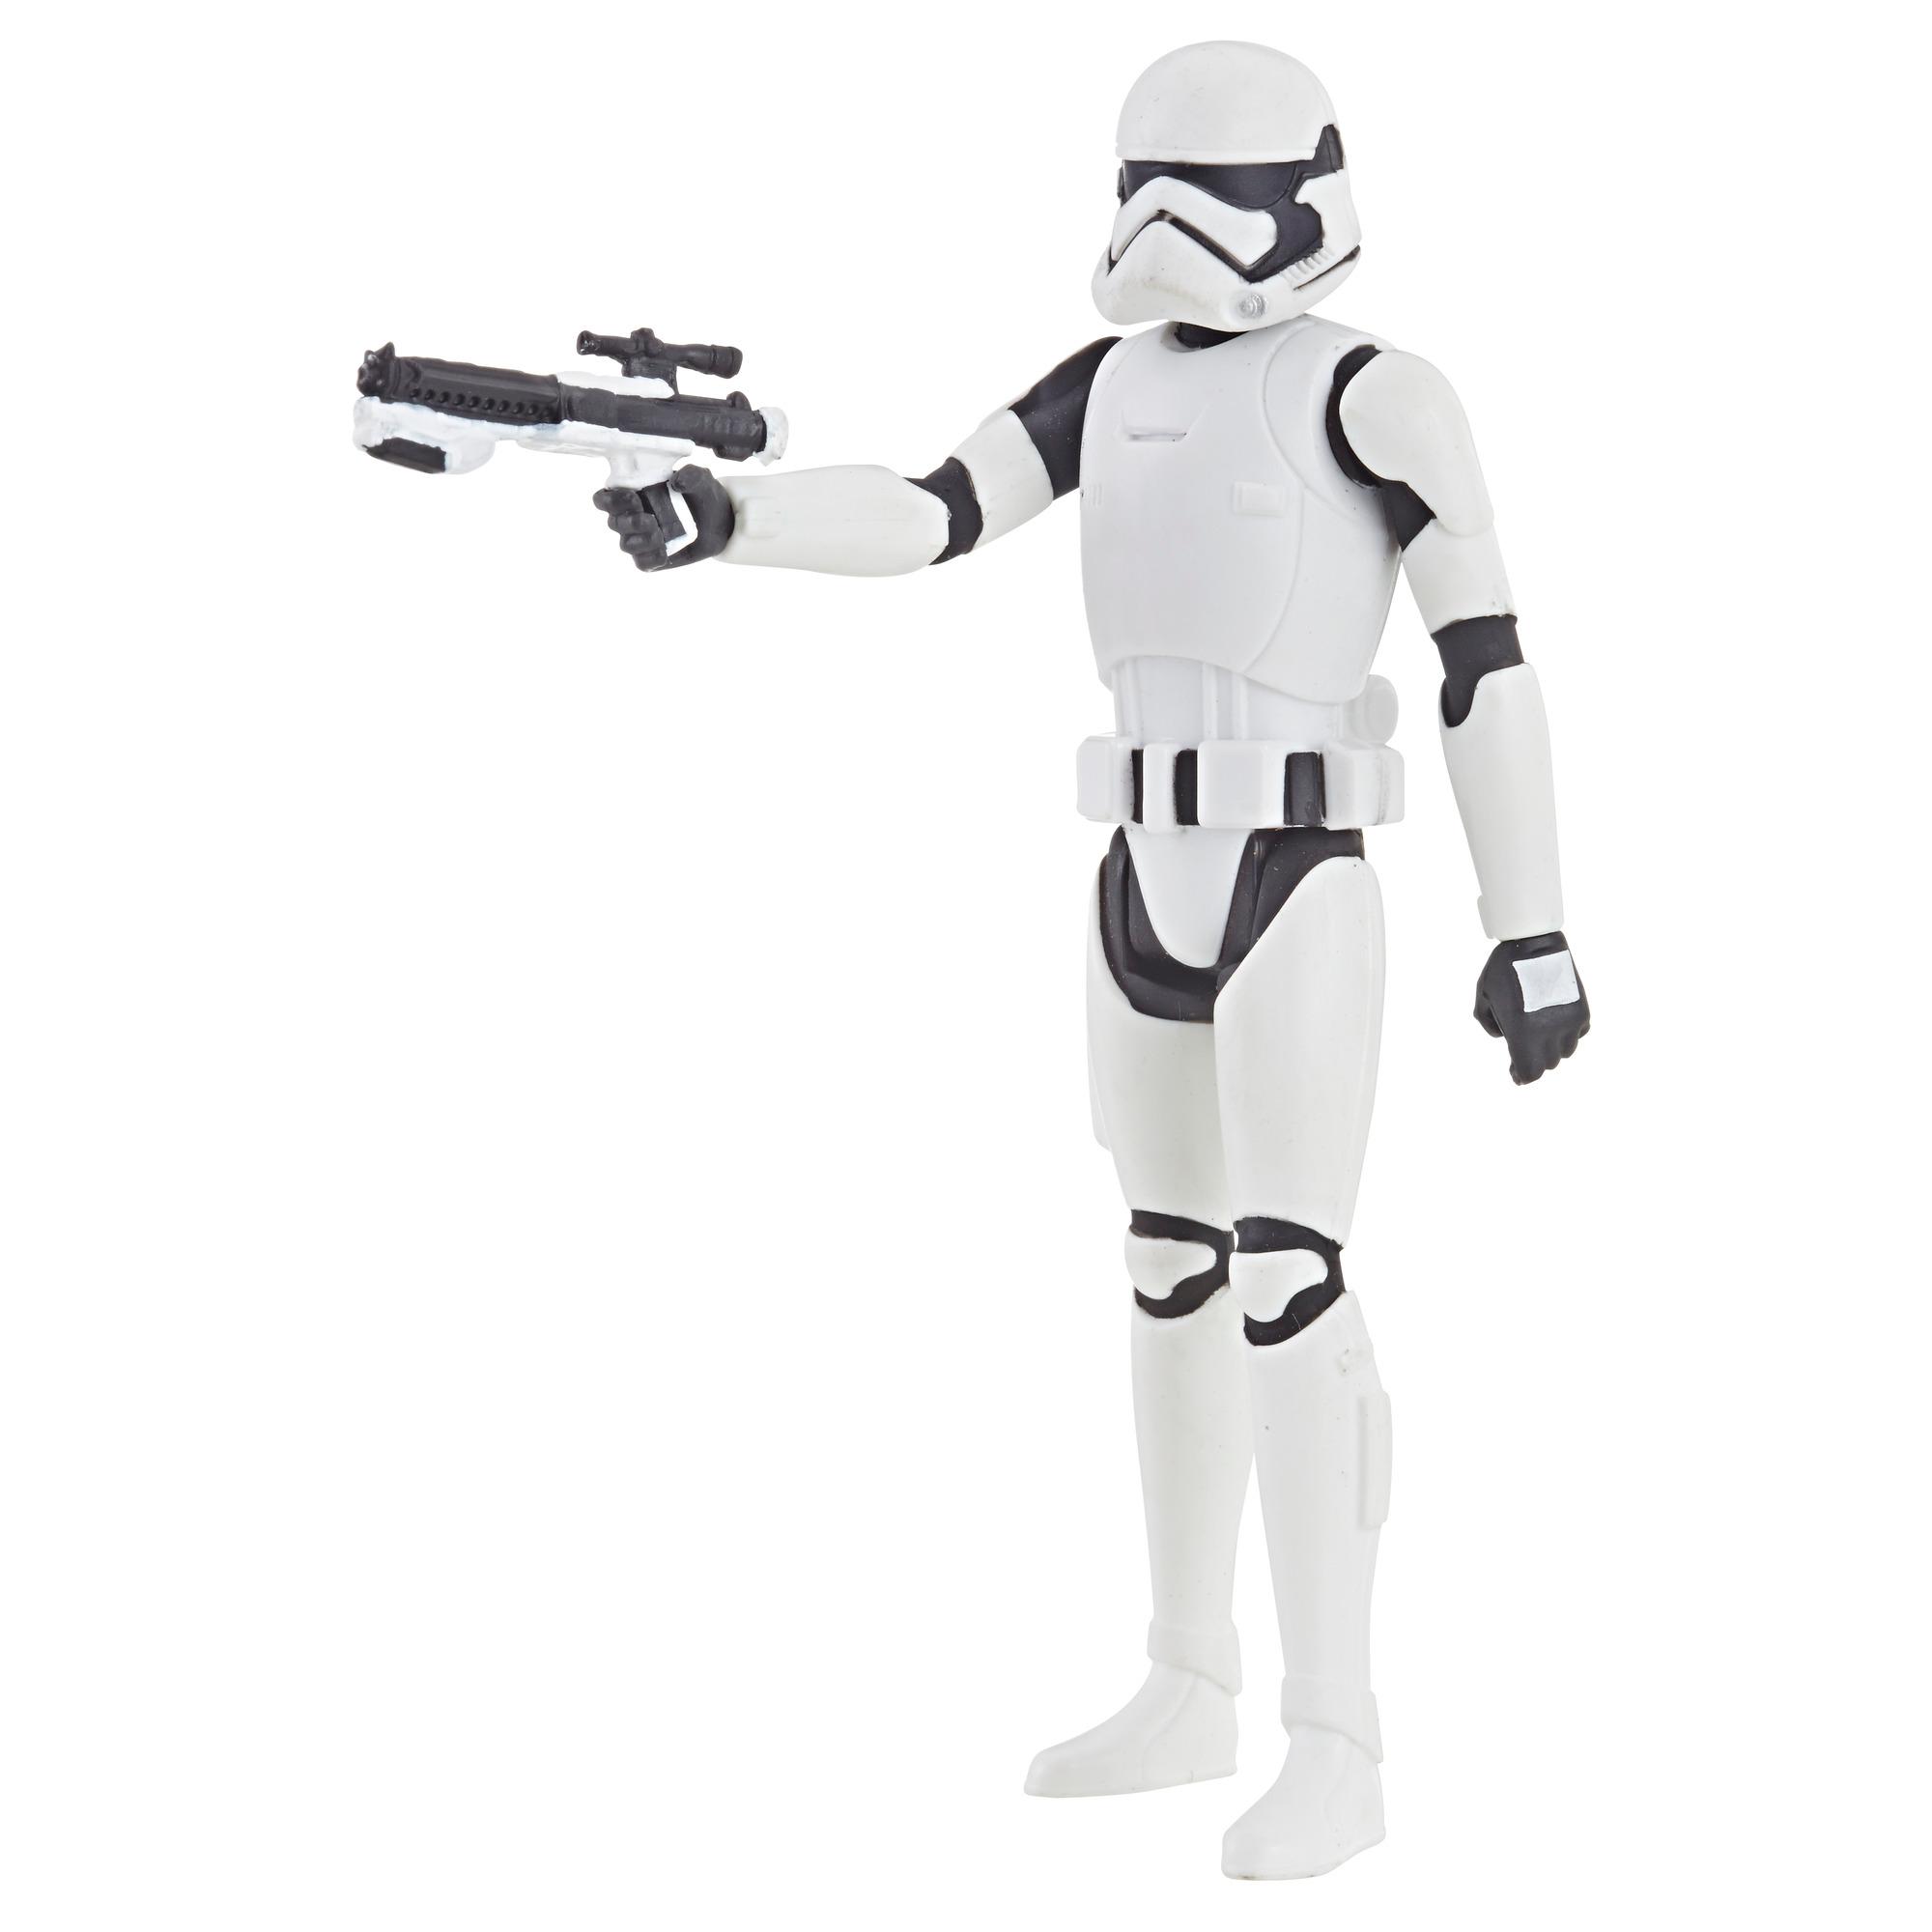 Star Wars Star Wars: Resistance Animated Series 3.75-inch First Order Stormtrooper Figure